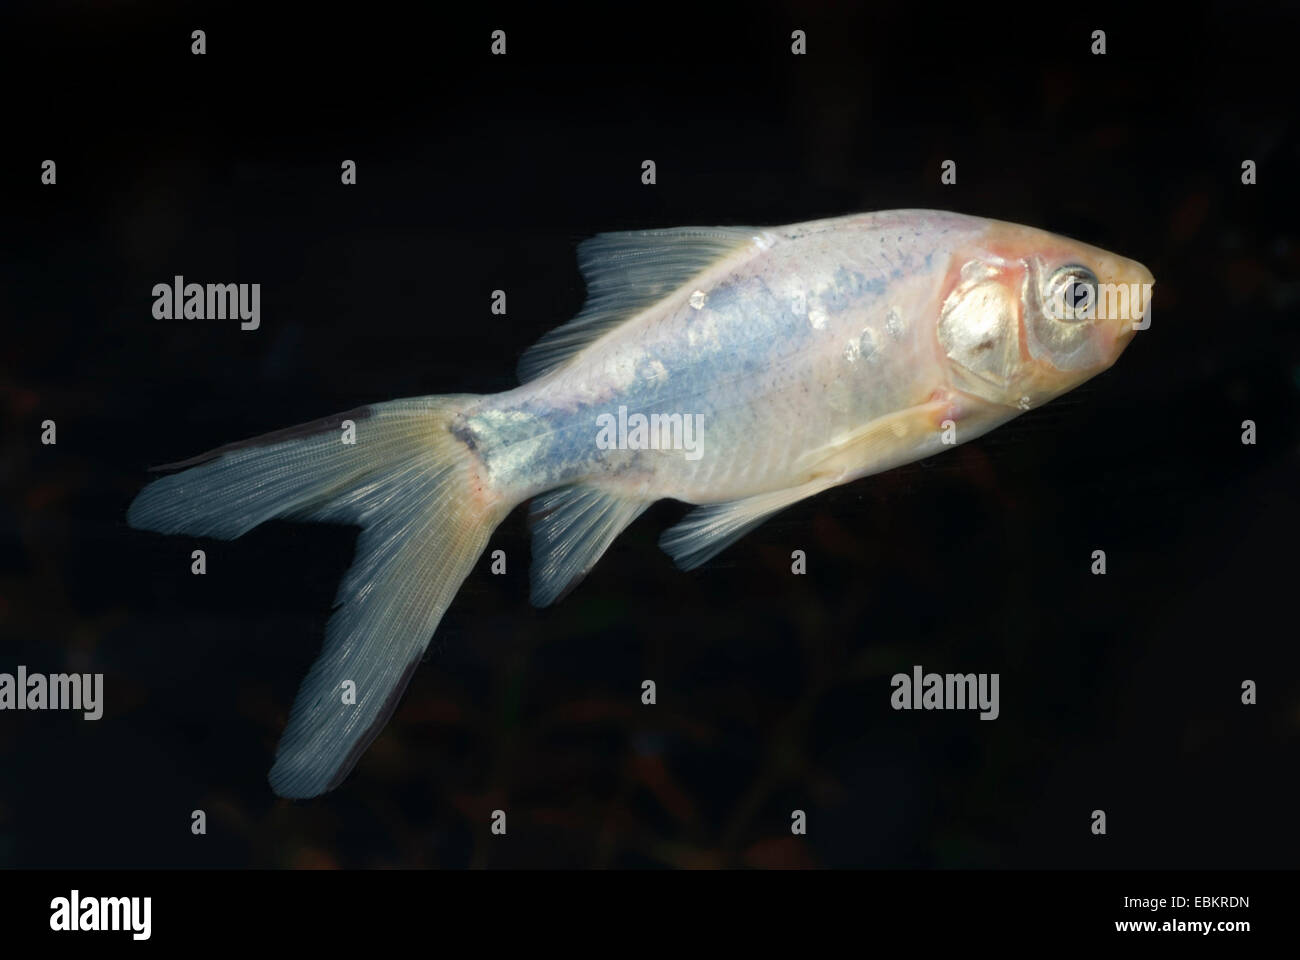 goldfish, common carp (Carassius auratus), breeding form blue-black colourform Stock Photo